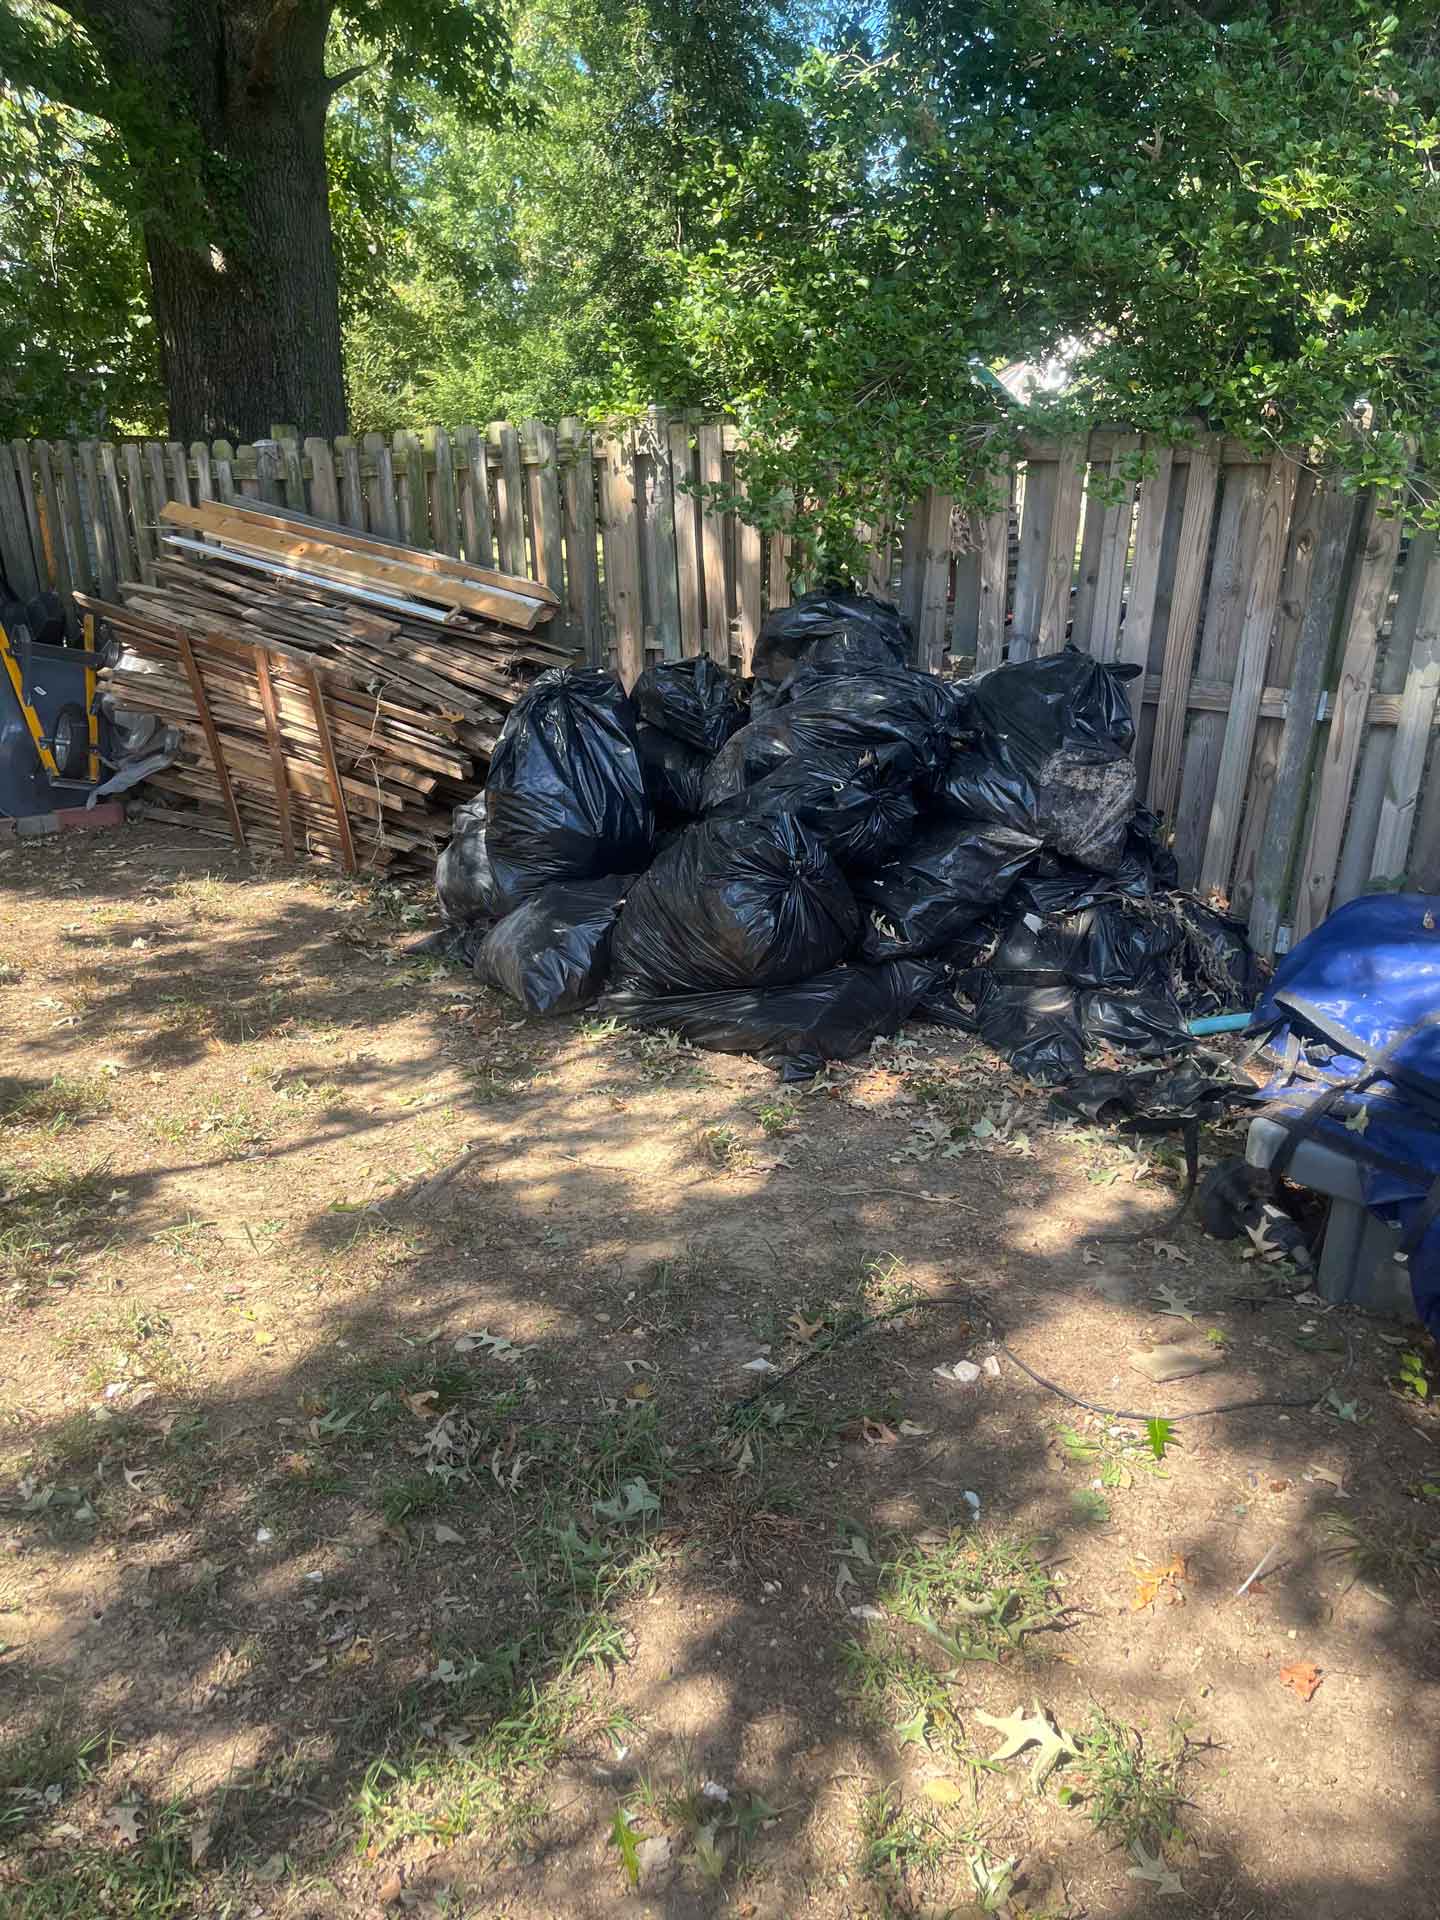 Pile of trash in backyard